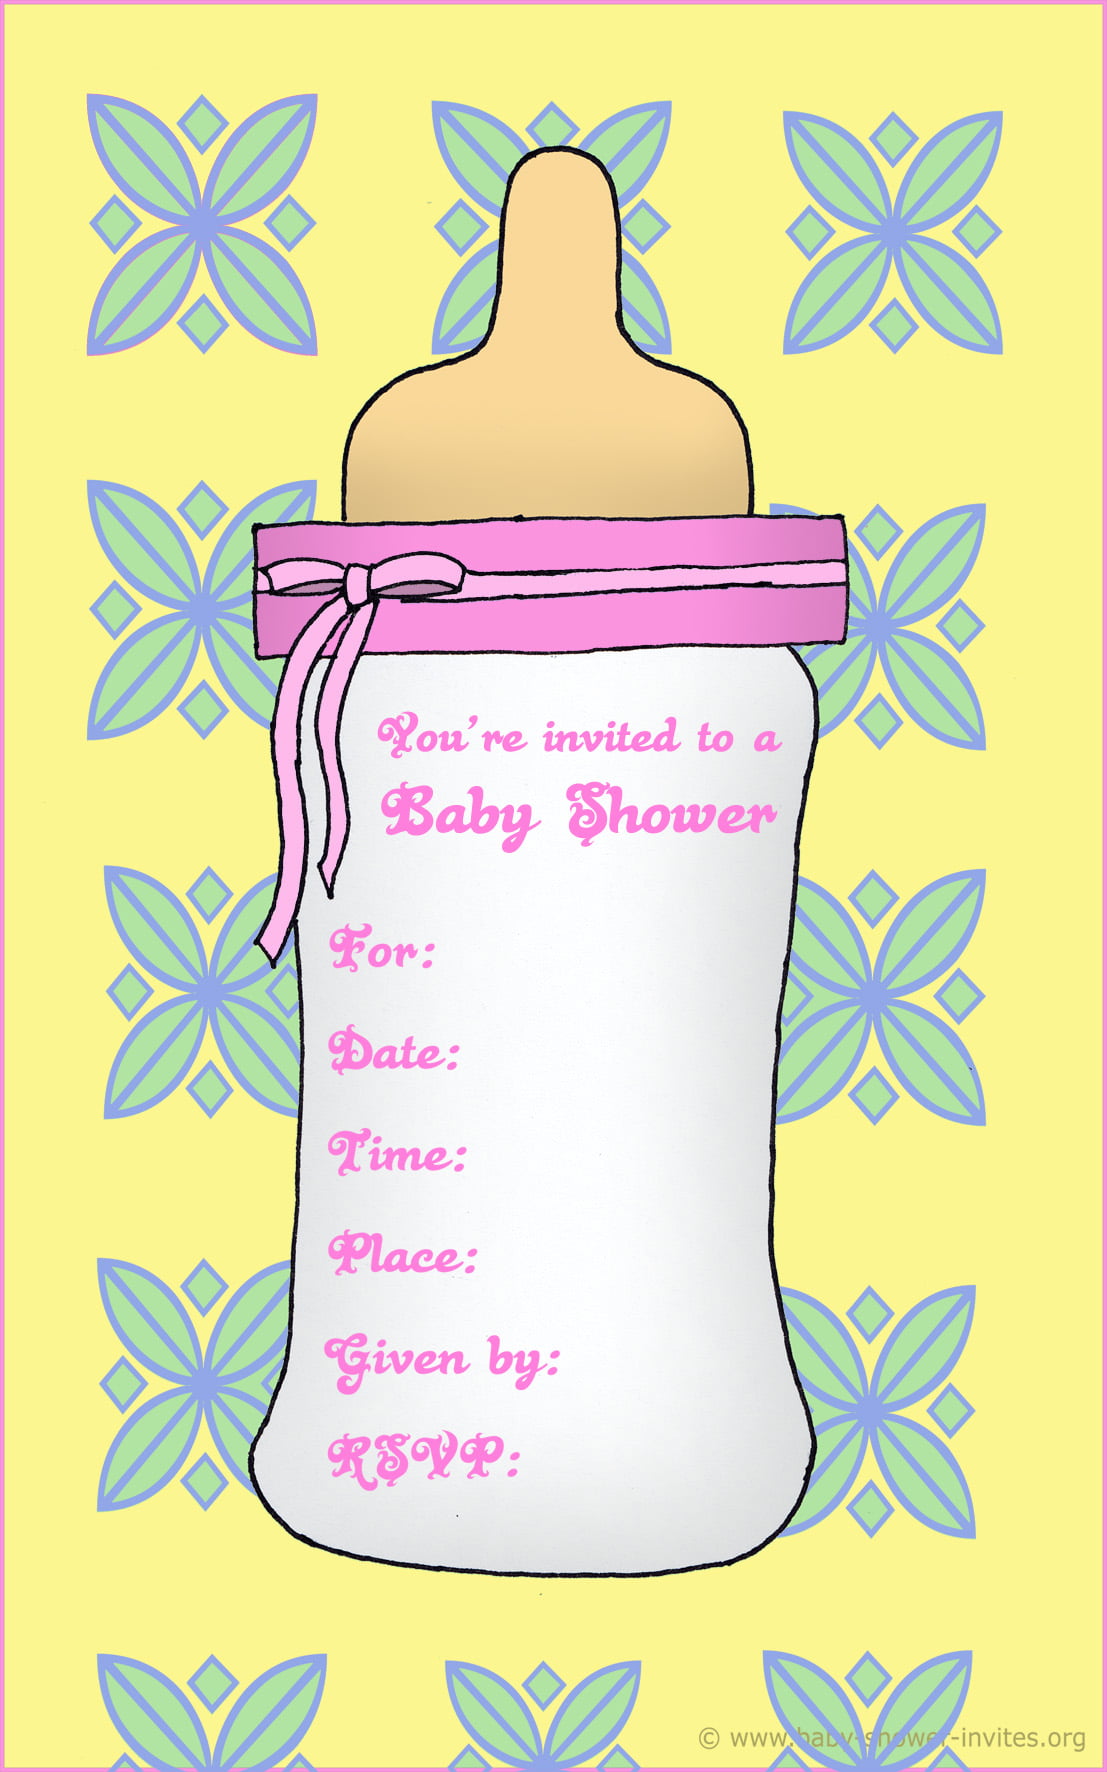 create-baby-shower-invitations-free-printable-baby-shower-invitations